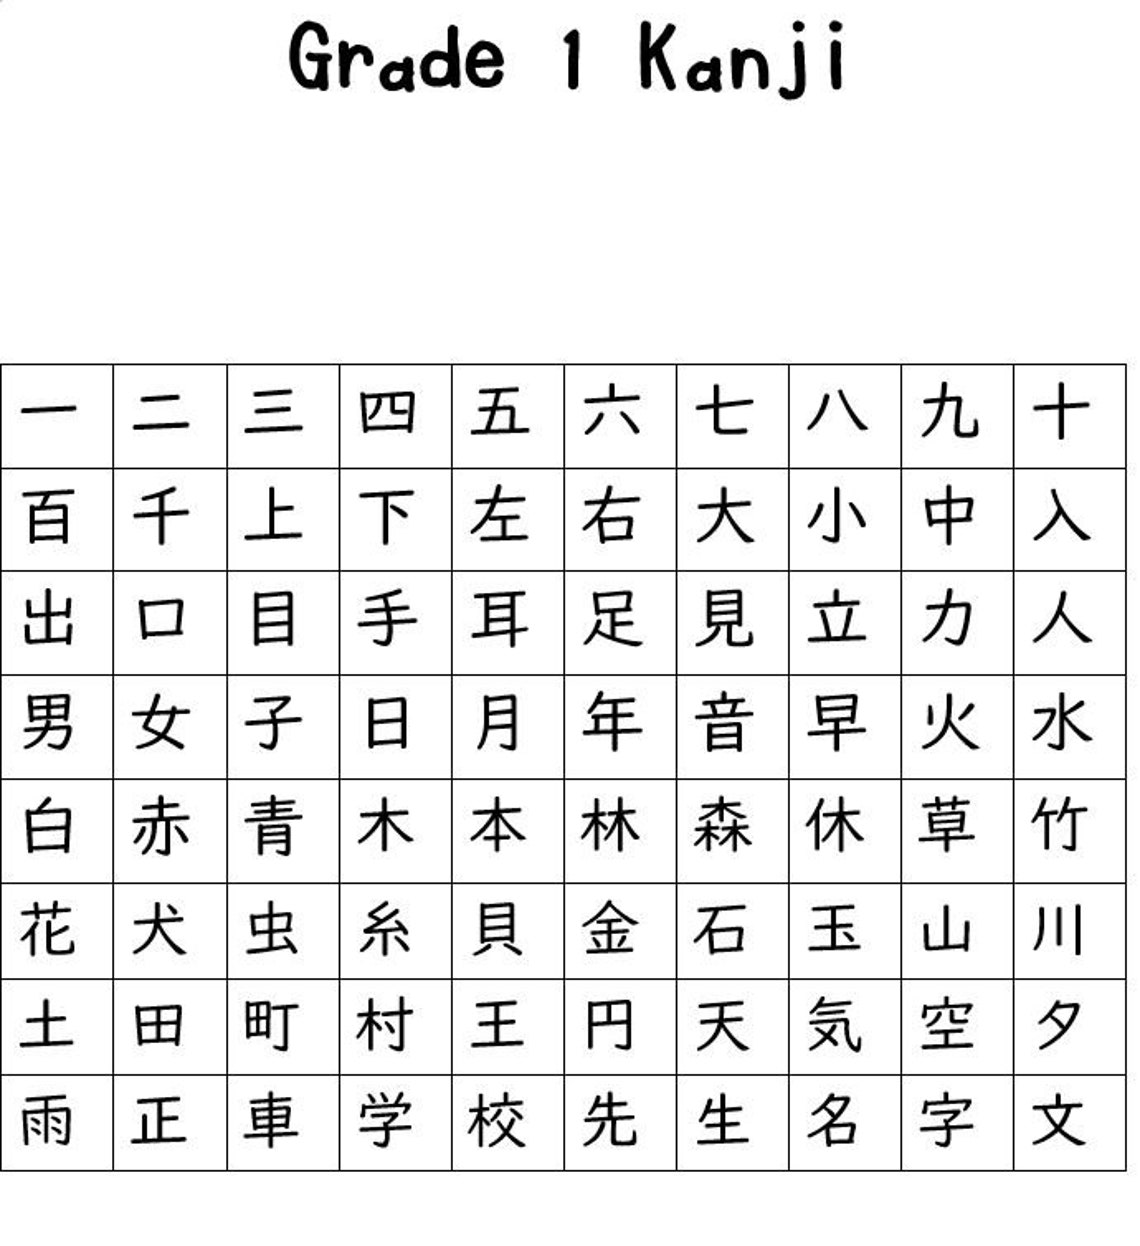 Japanese Kanji By Grade